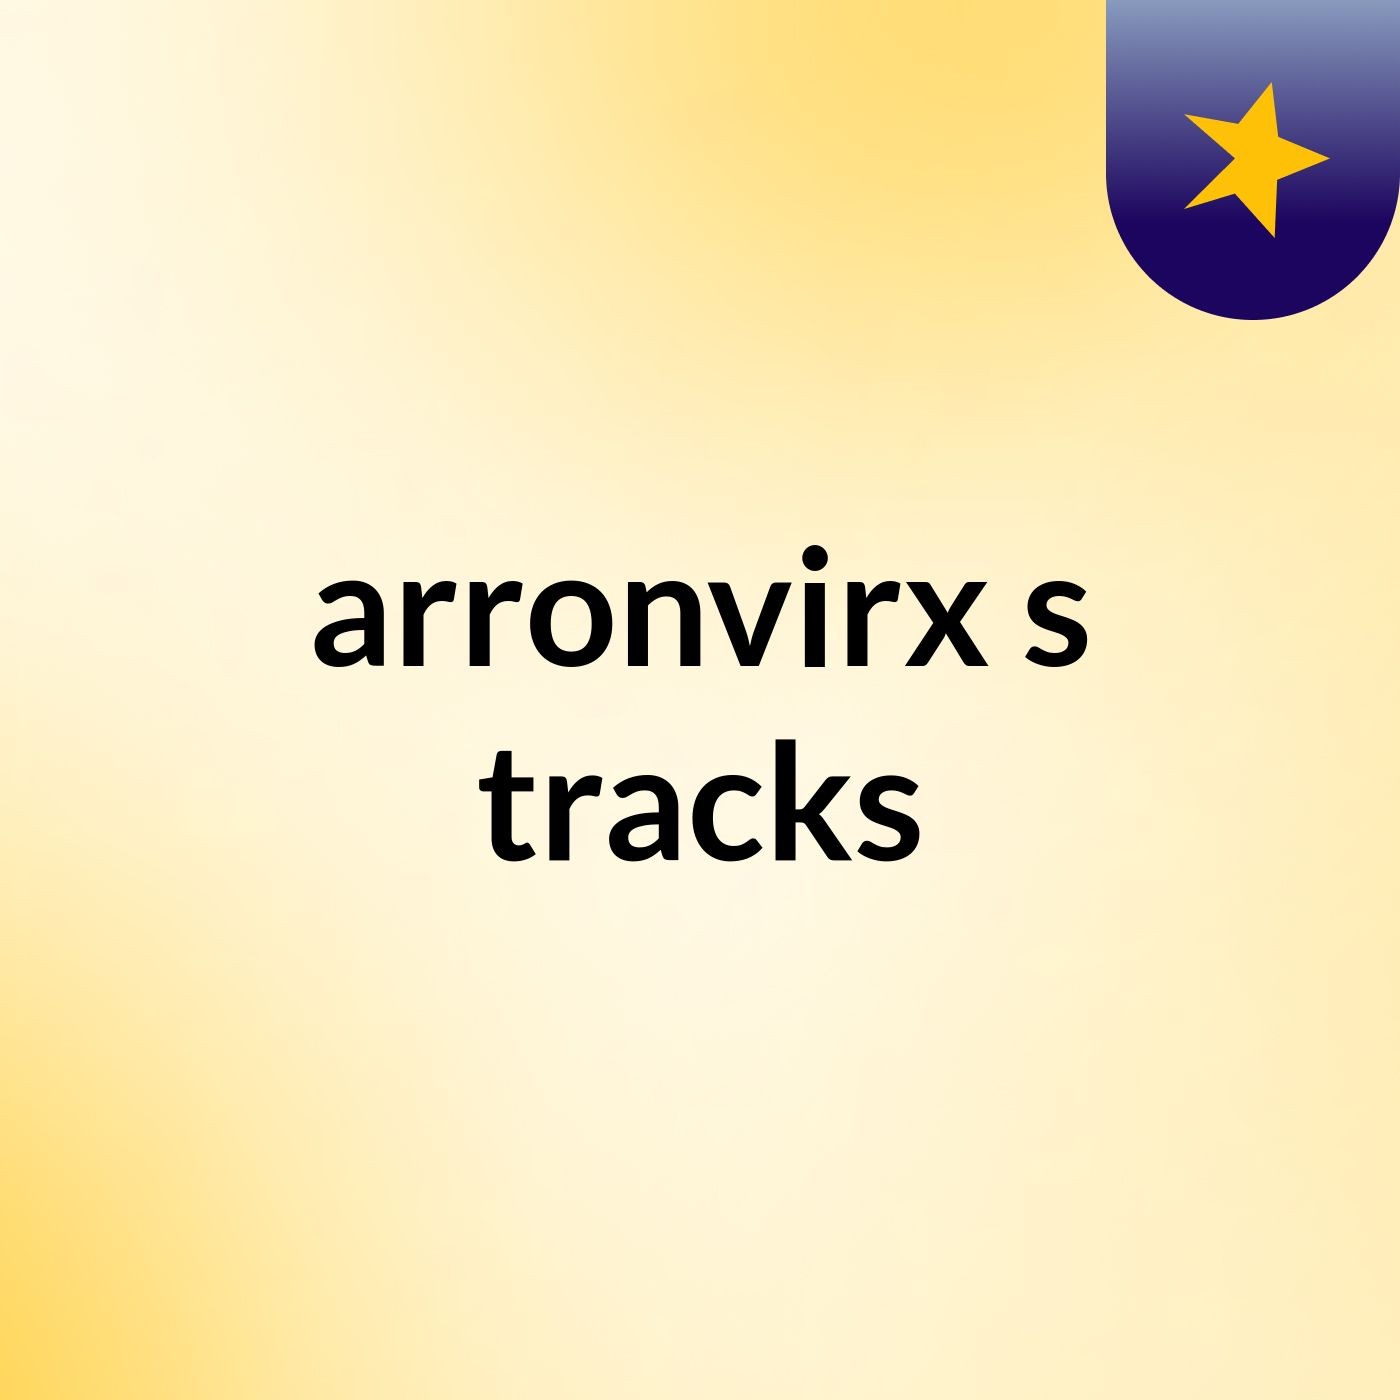 arronvirx's tracks